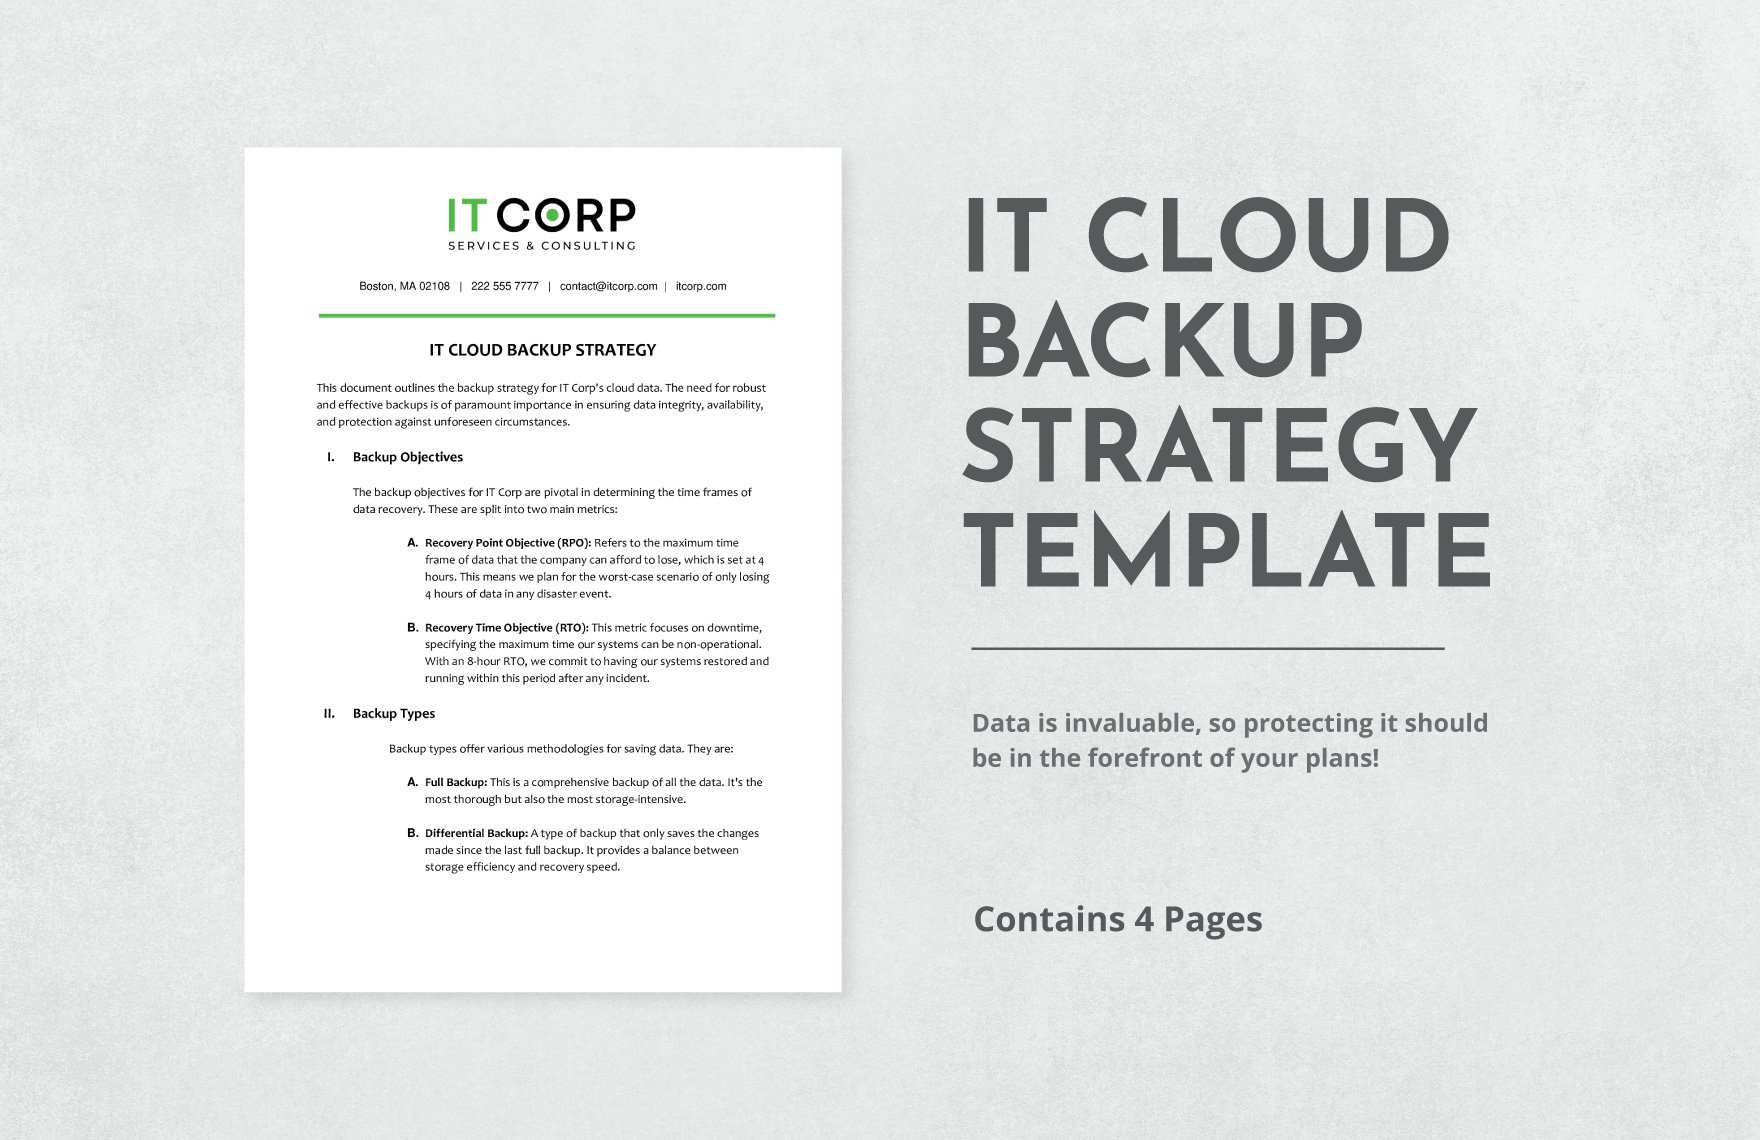 IT Cloud Backup Strategy Template